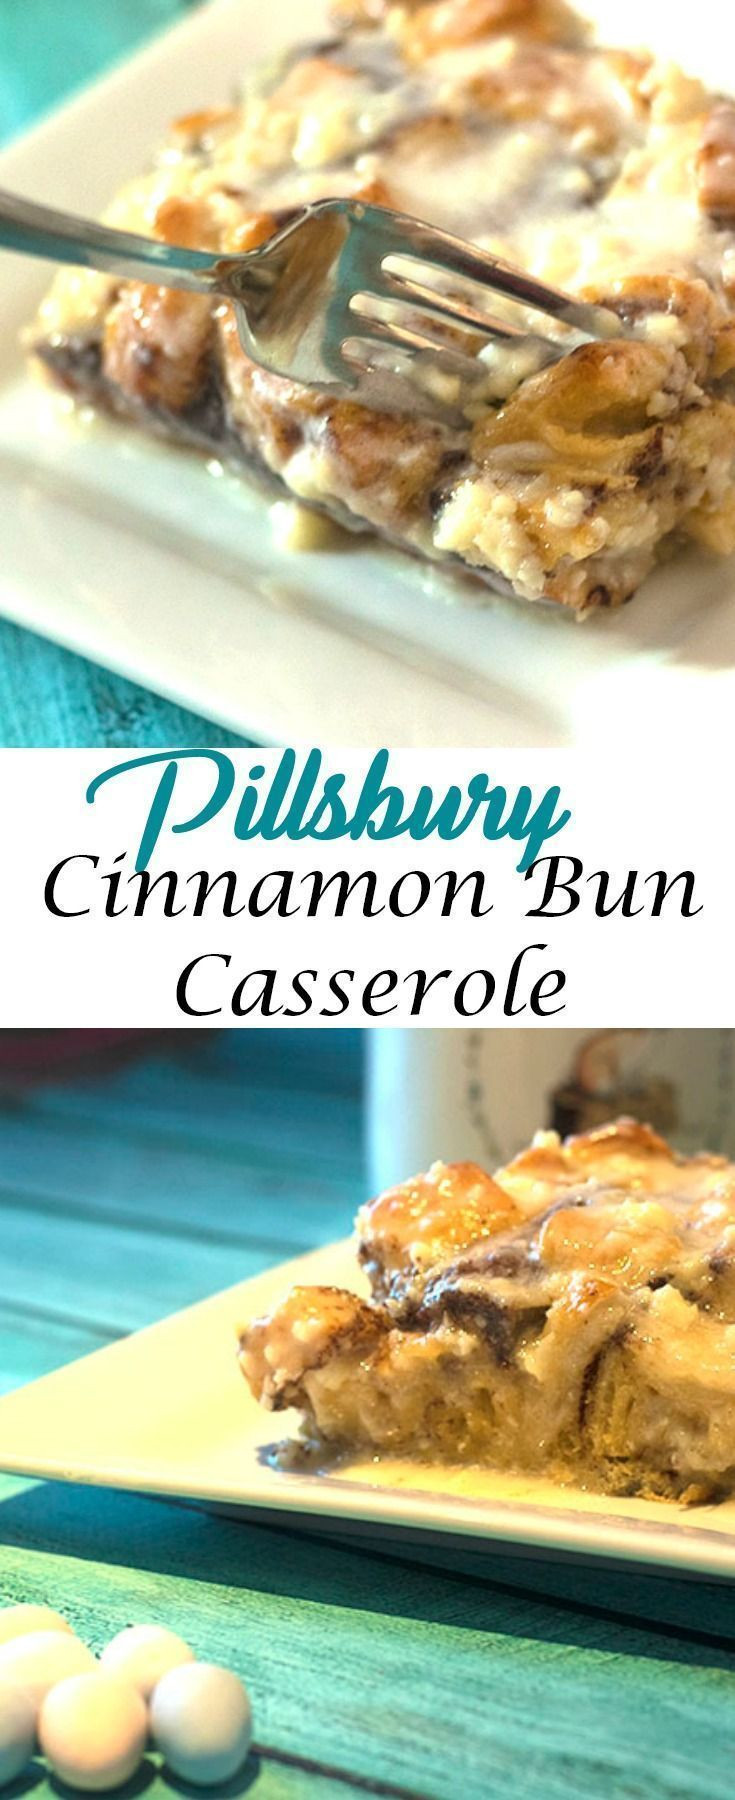 Pillsbury French Toast Casserole
 Pillsbury Cinnamon Bun Casserole Recipe